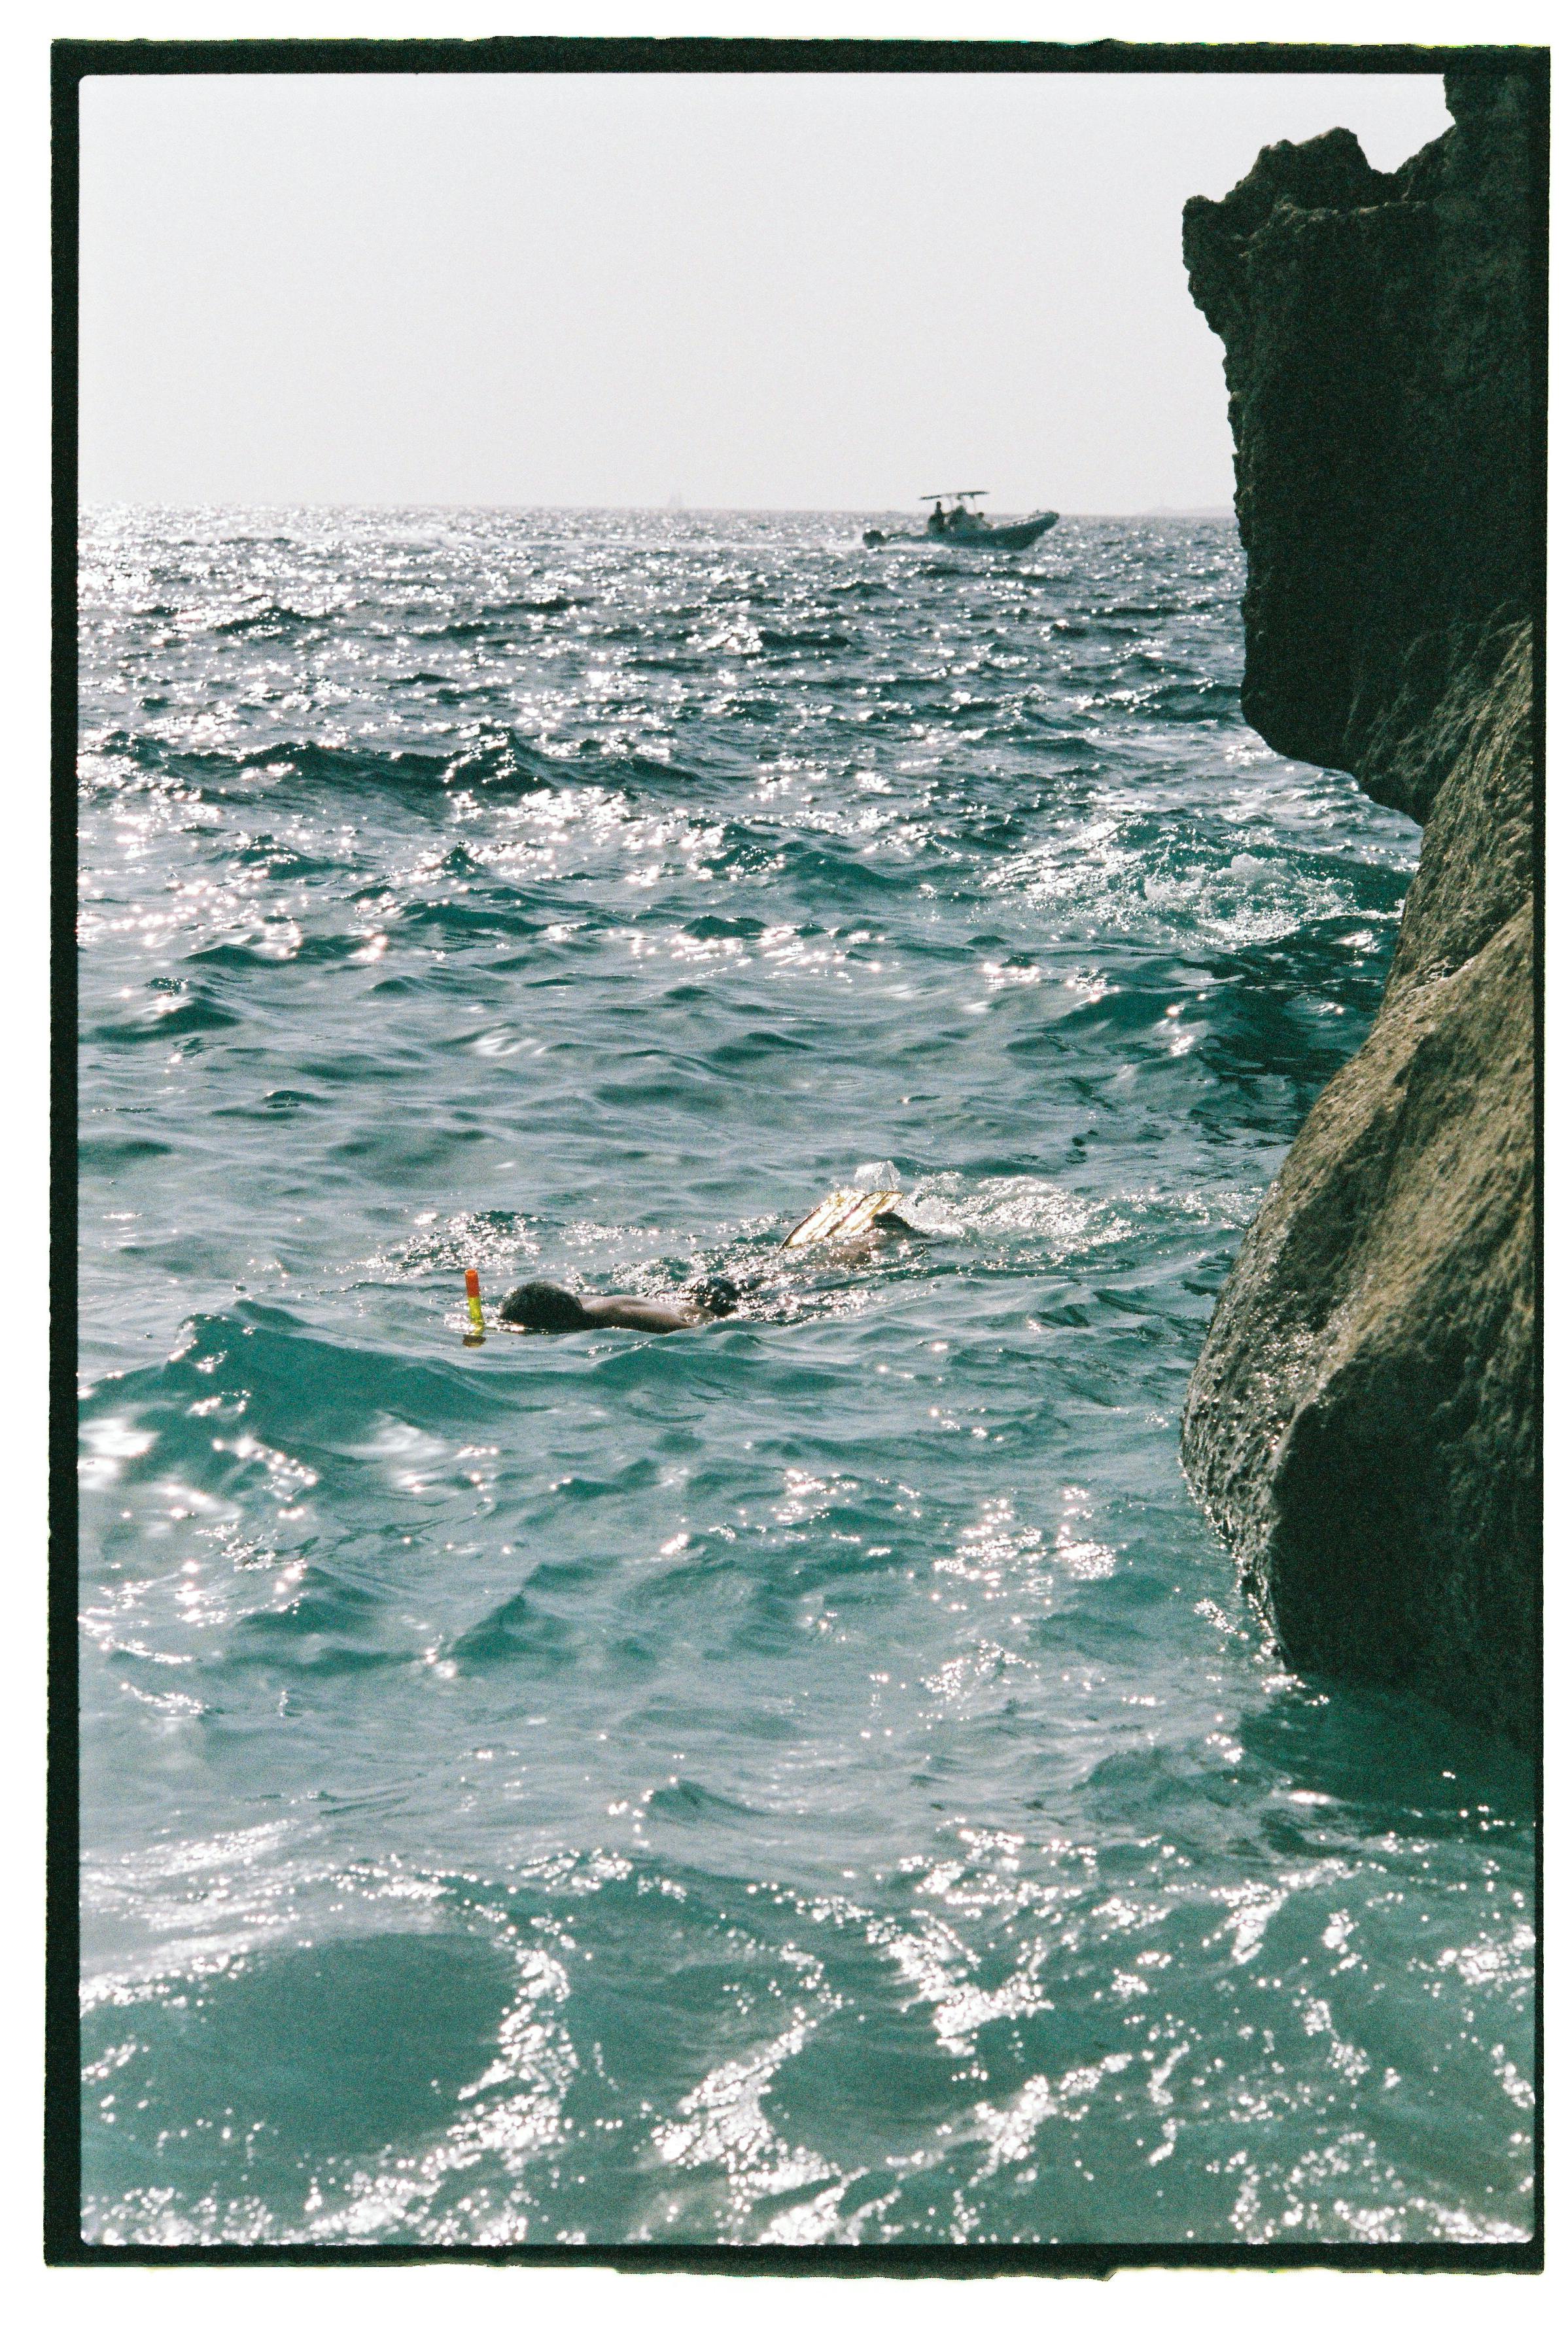 person snorkeling near rock on shore